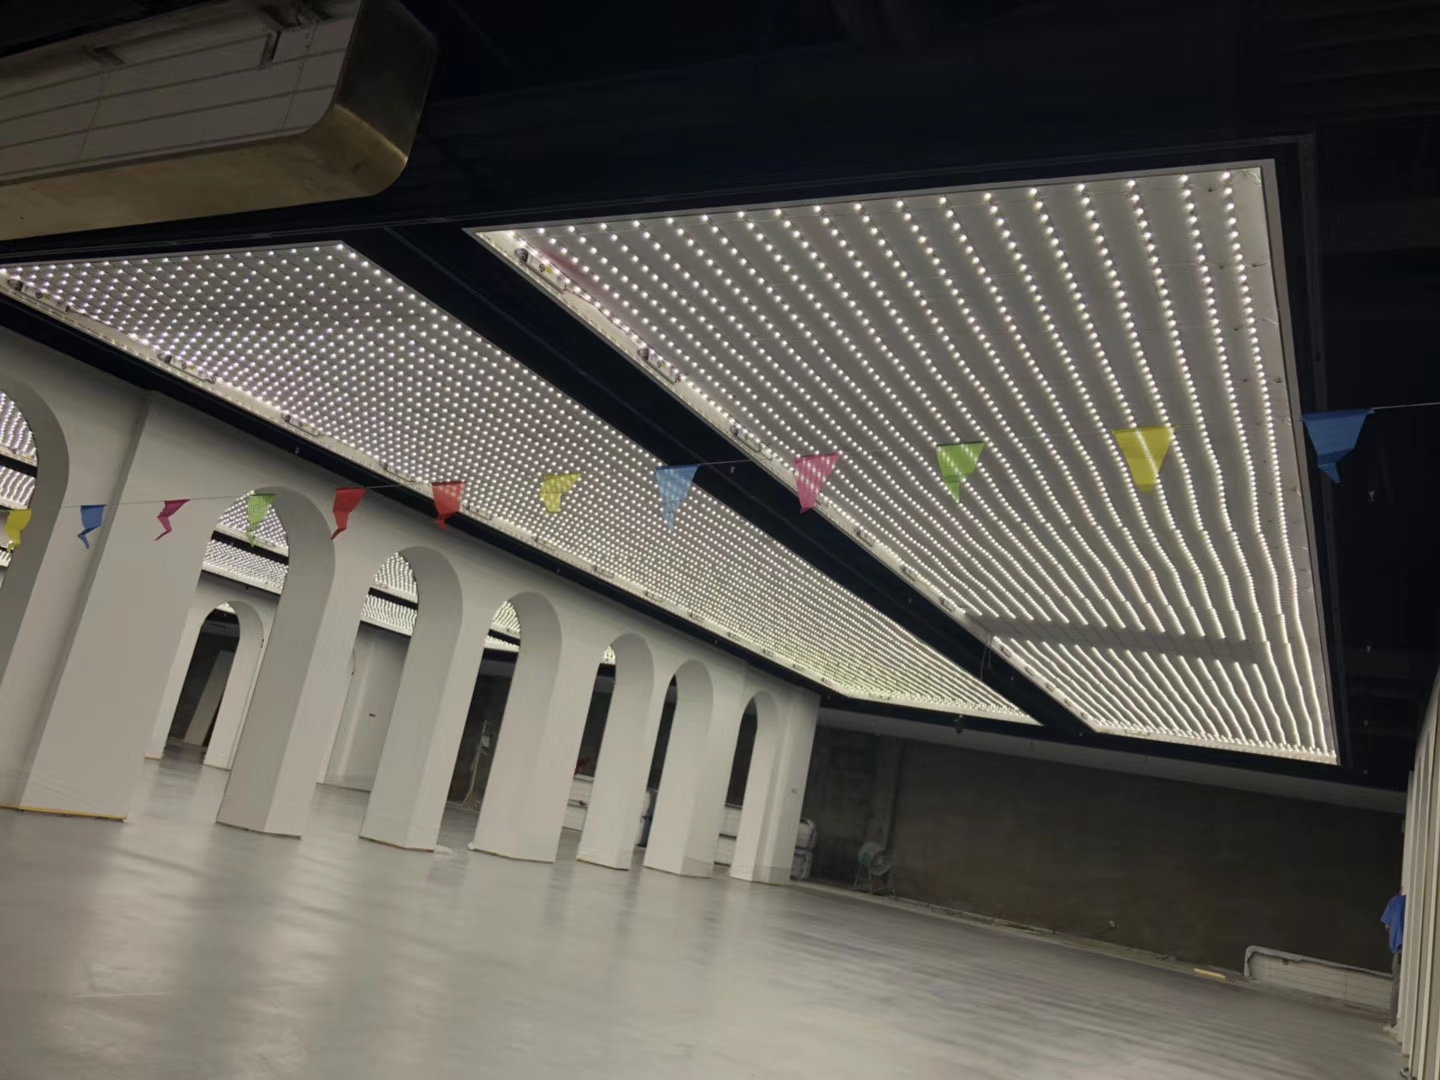 High CRI backlight LED strips installed in ceiling